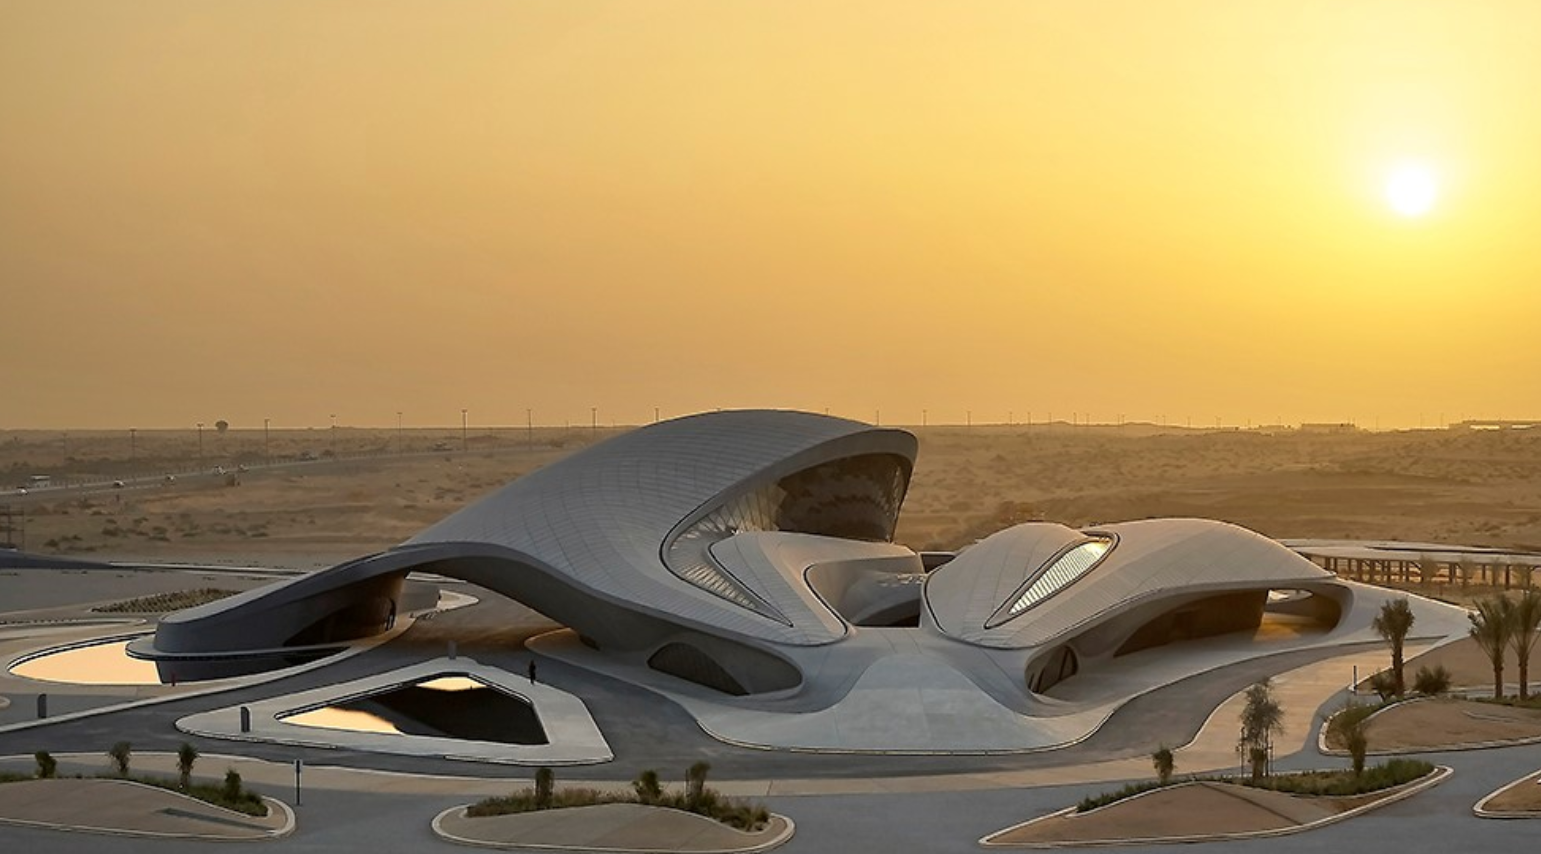 Zaha Hadids final designs opens in the UAE